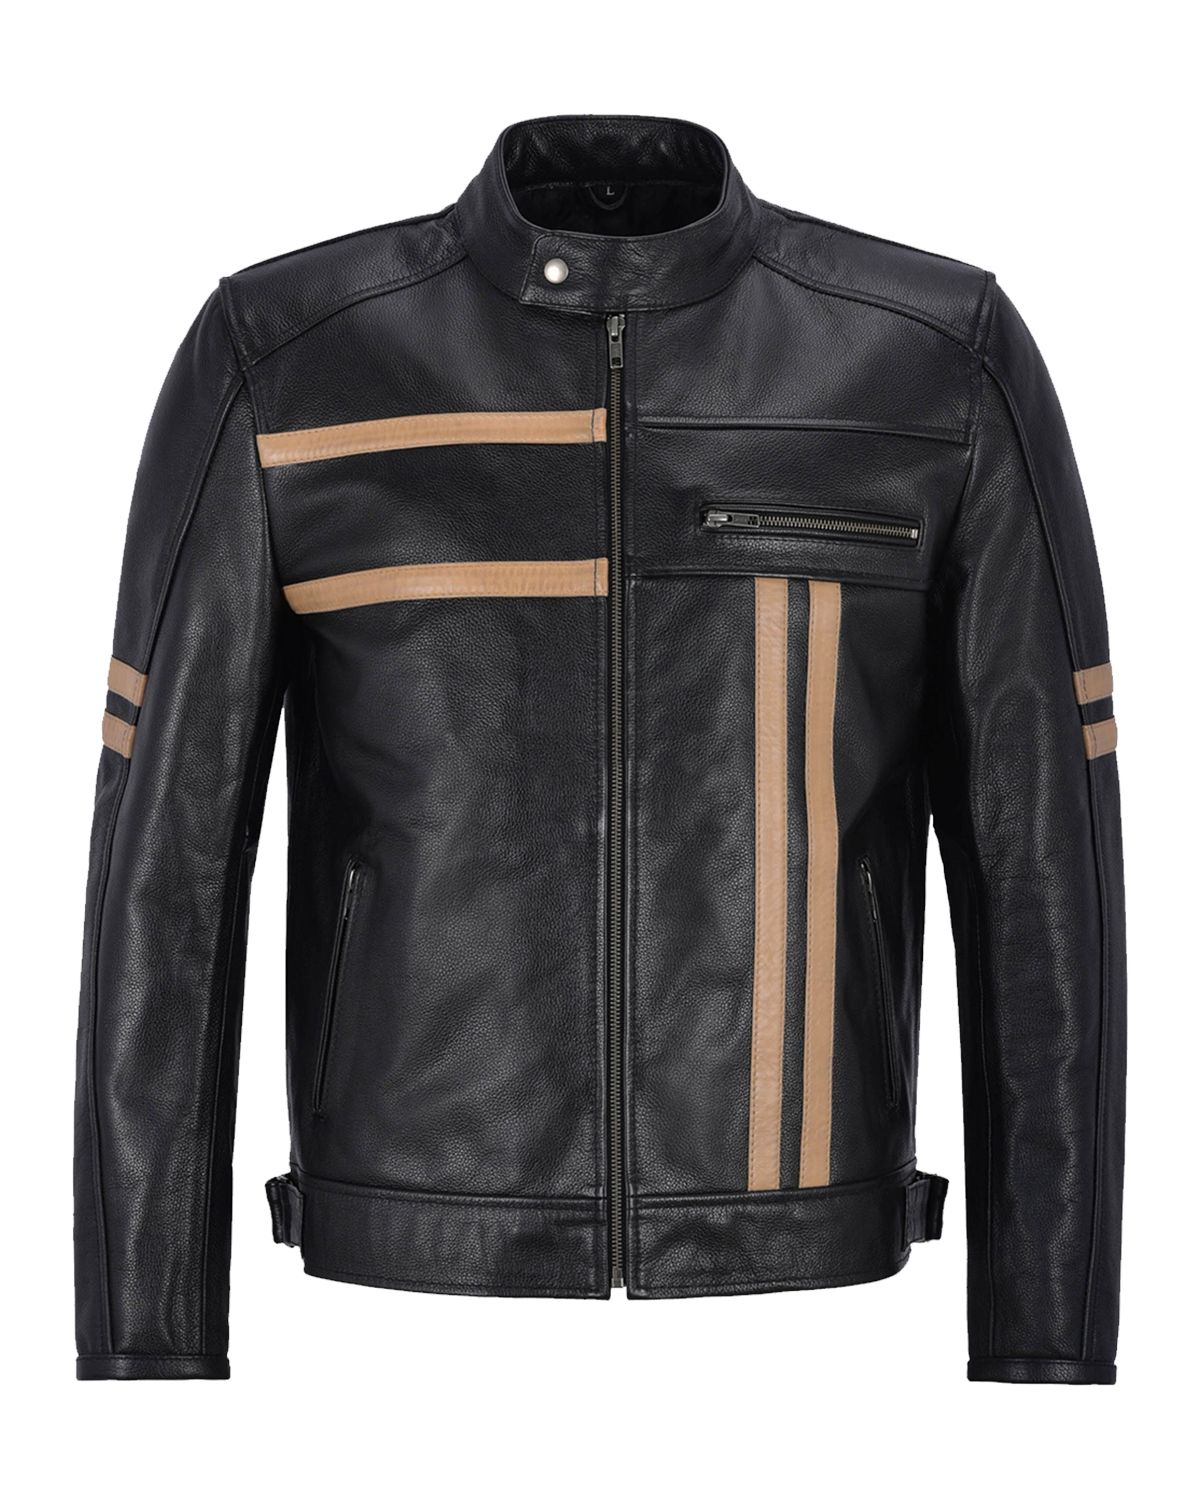 Elite Men's Black With Beige Stripes Biker Motorcycle Leather Jacket